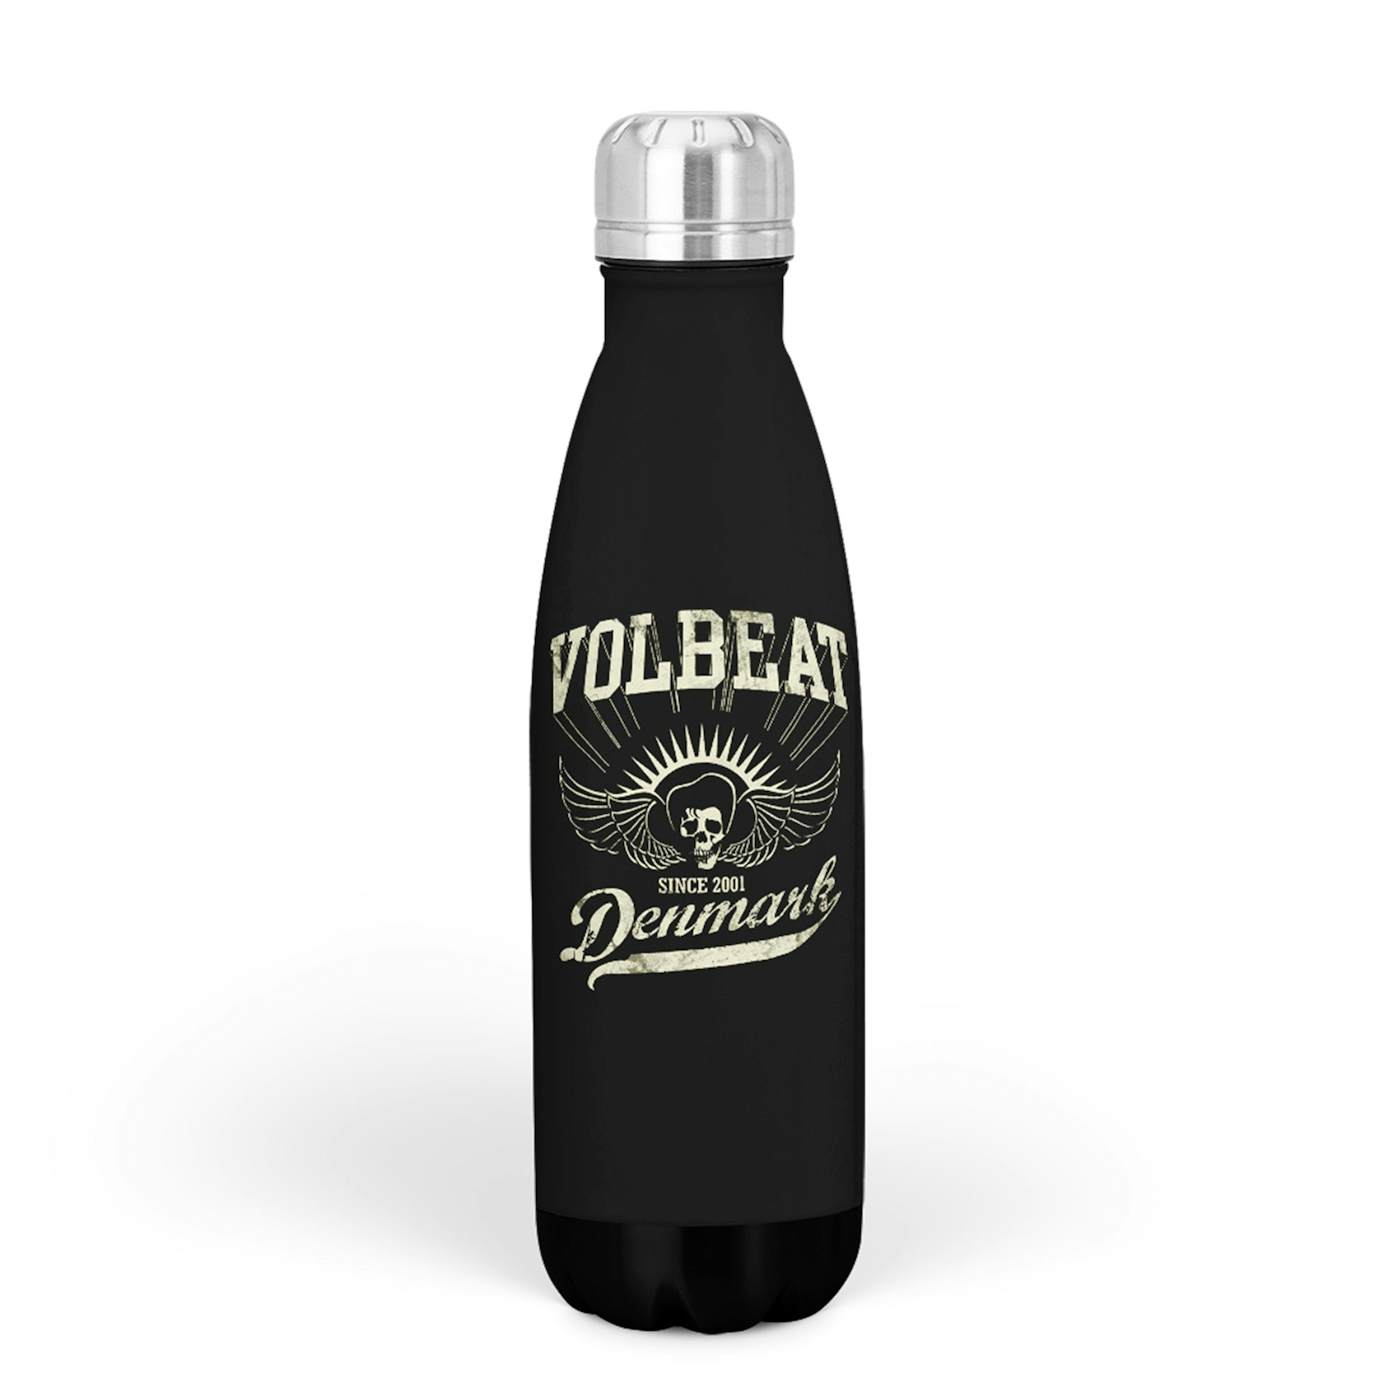 Rocksax Volbeat Drinks Bottle - Denmark